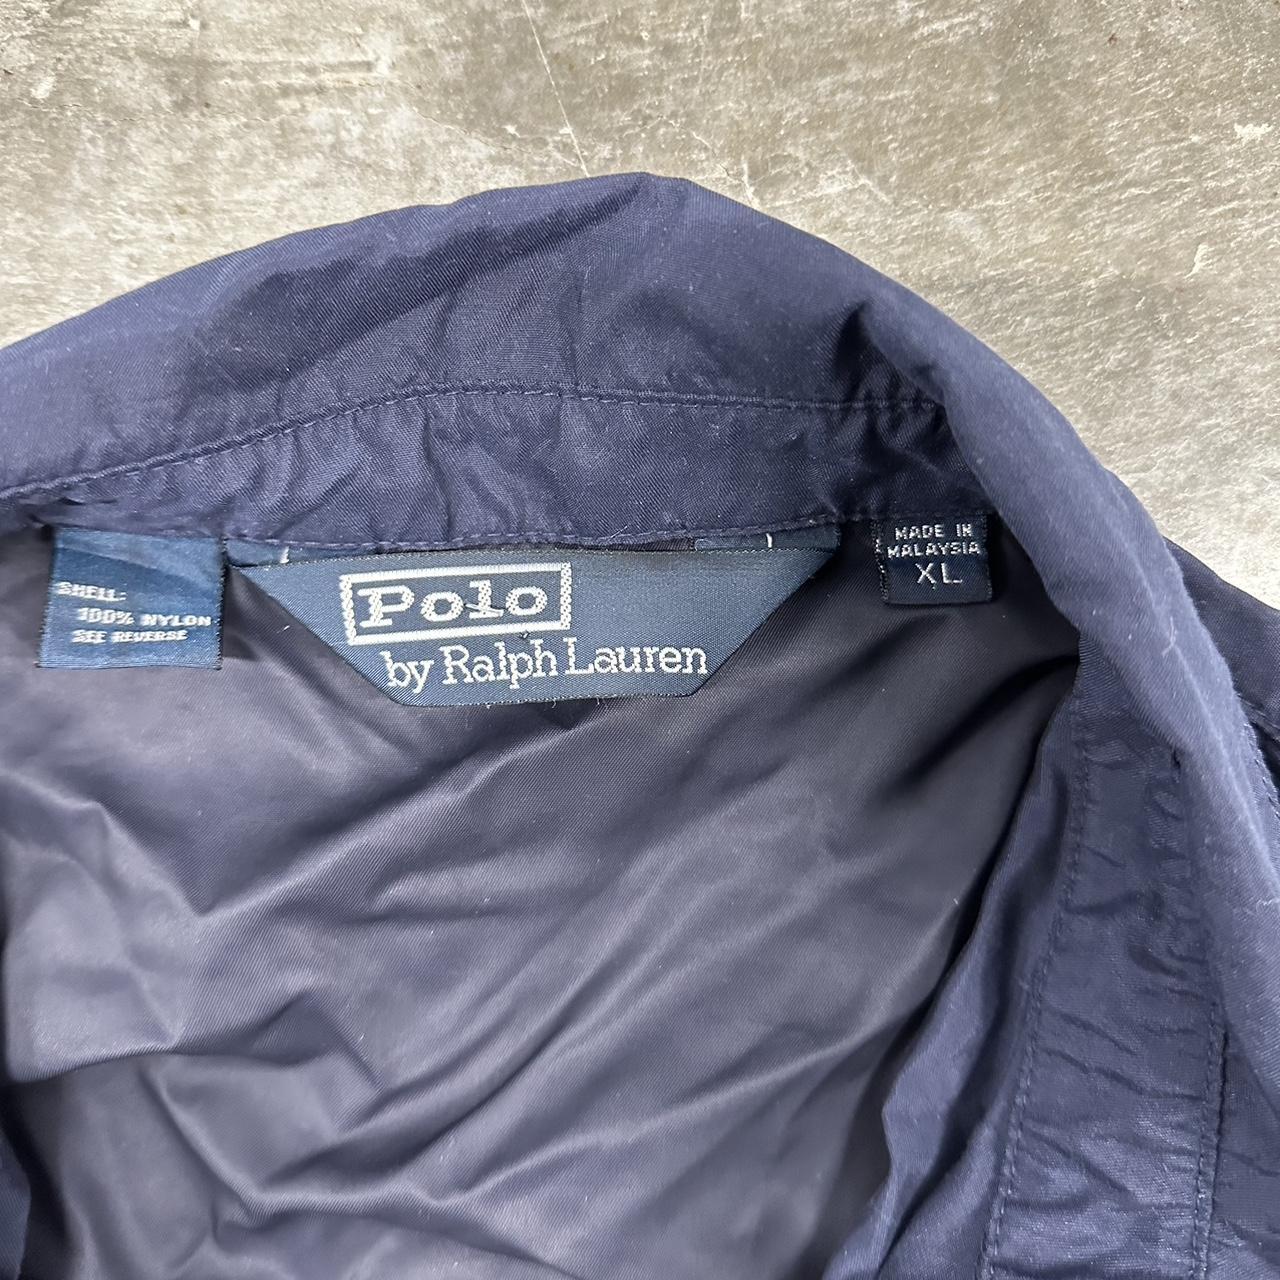 Polo Ralph Lauren Jacket Size XL #poloralphlauren... - Depop